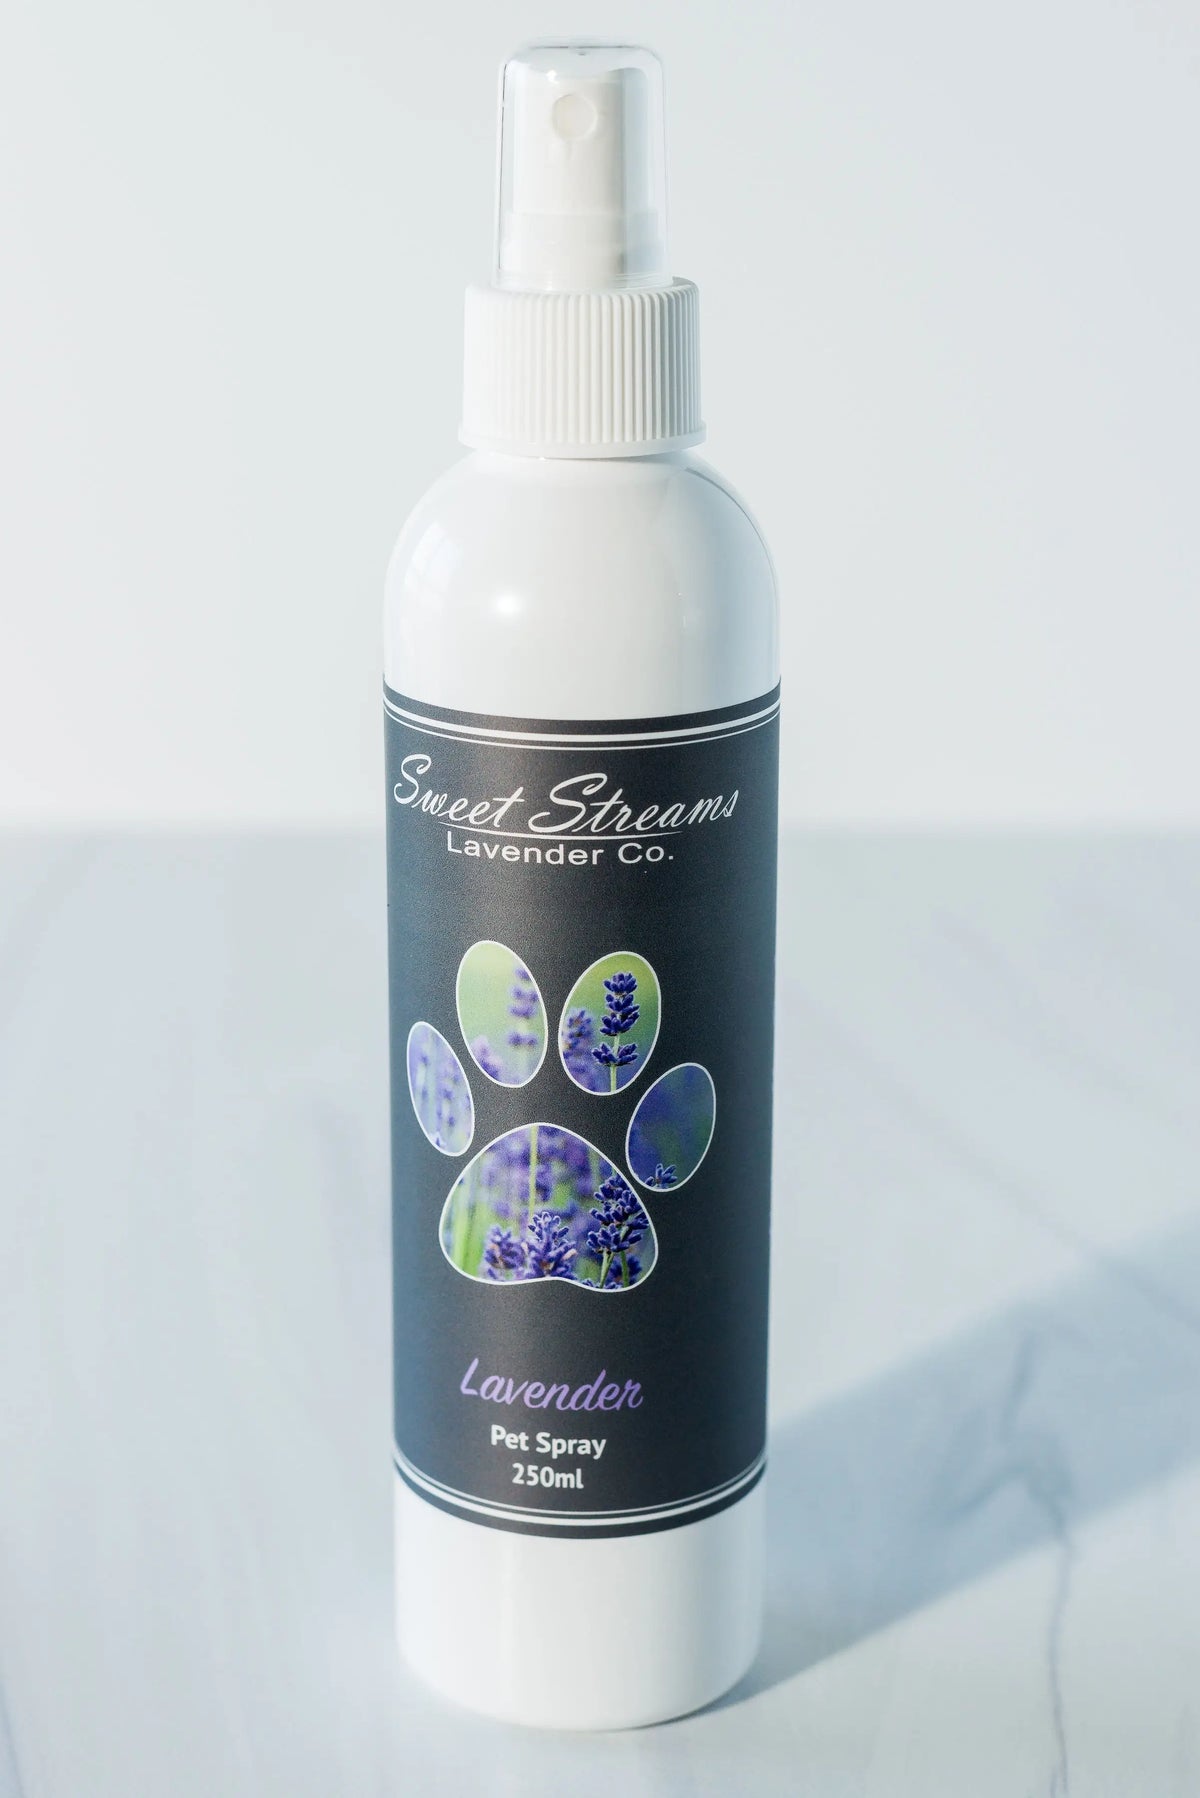 Sweet Streams Lavender Co. - Lavender Pet Spray